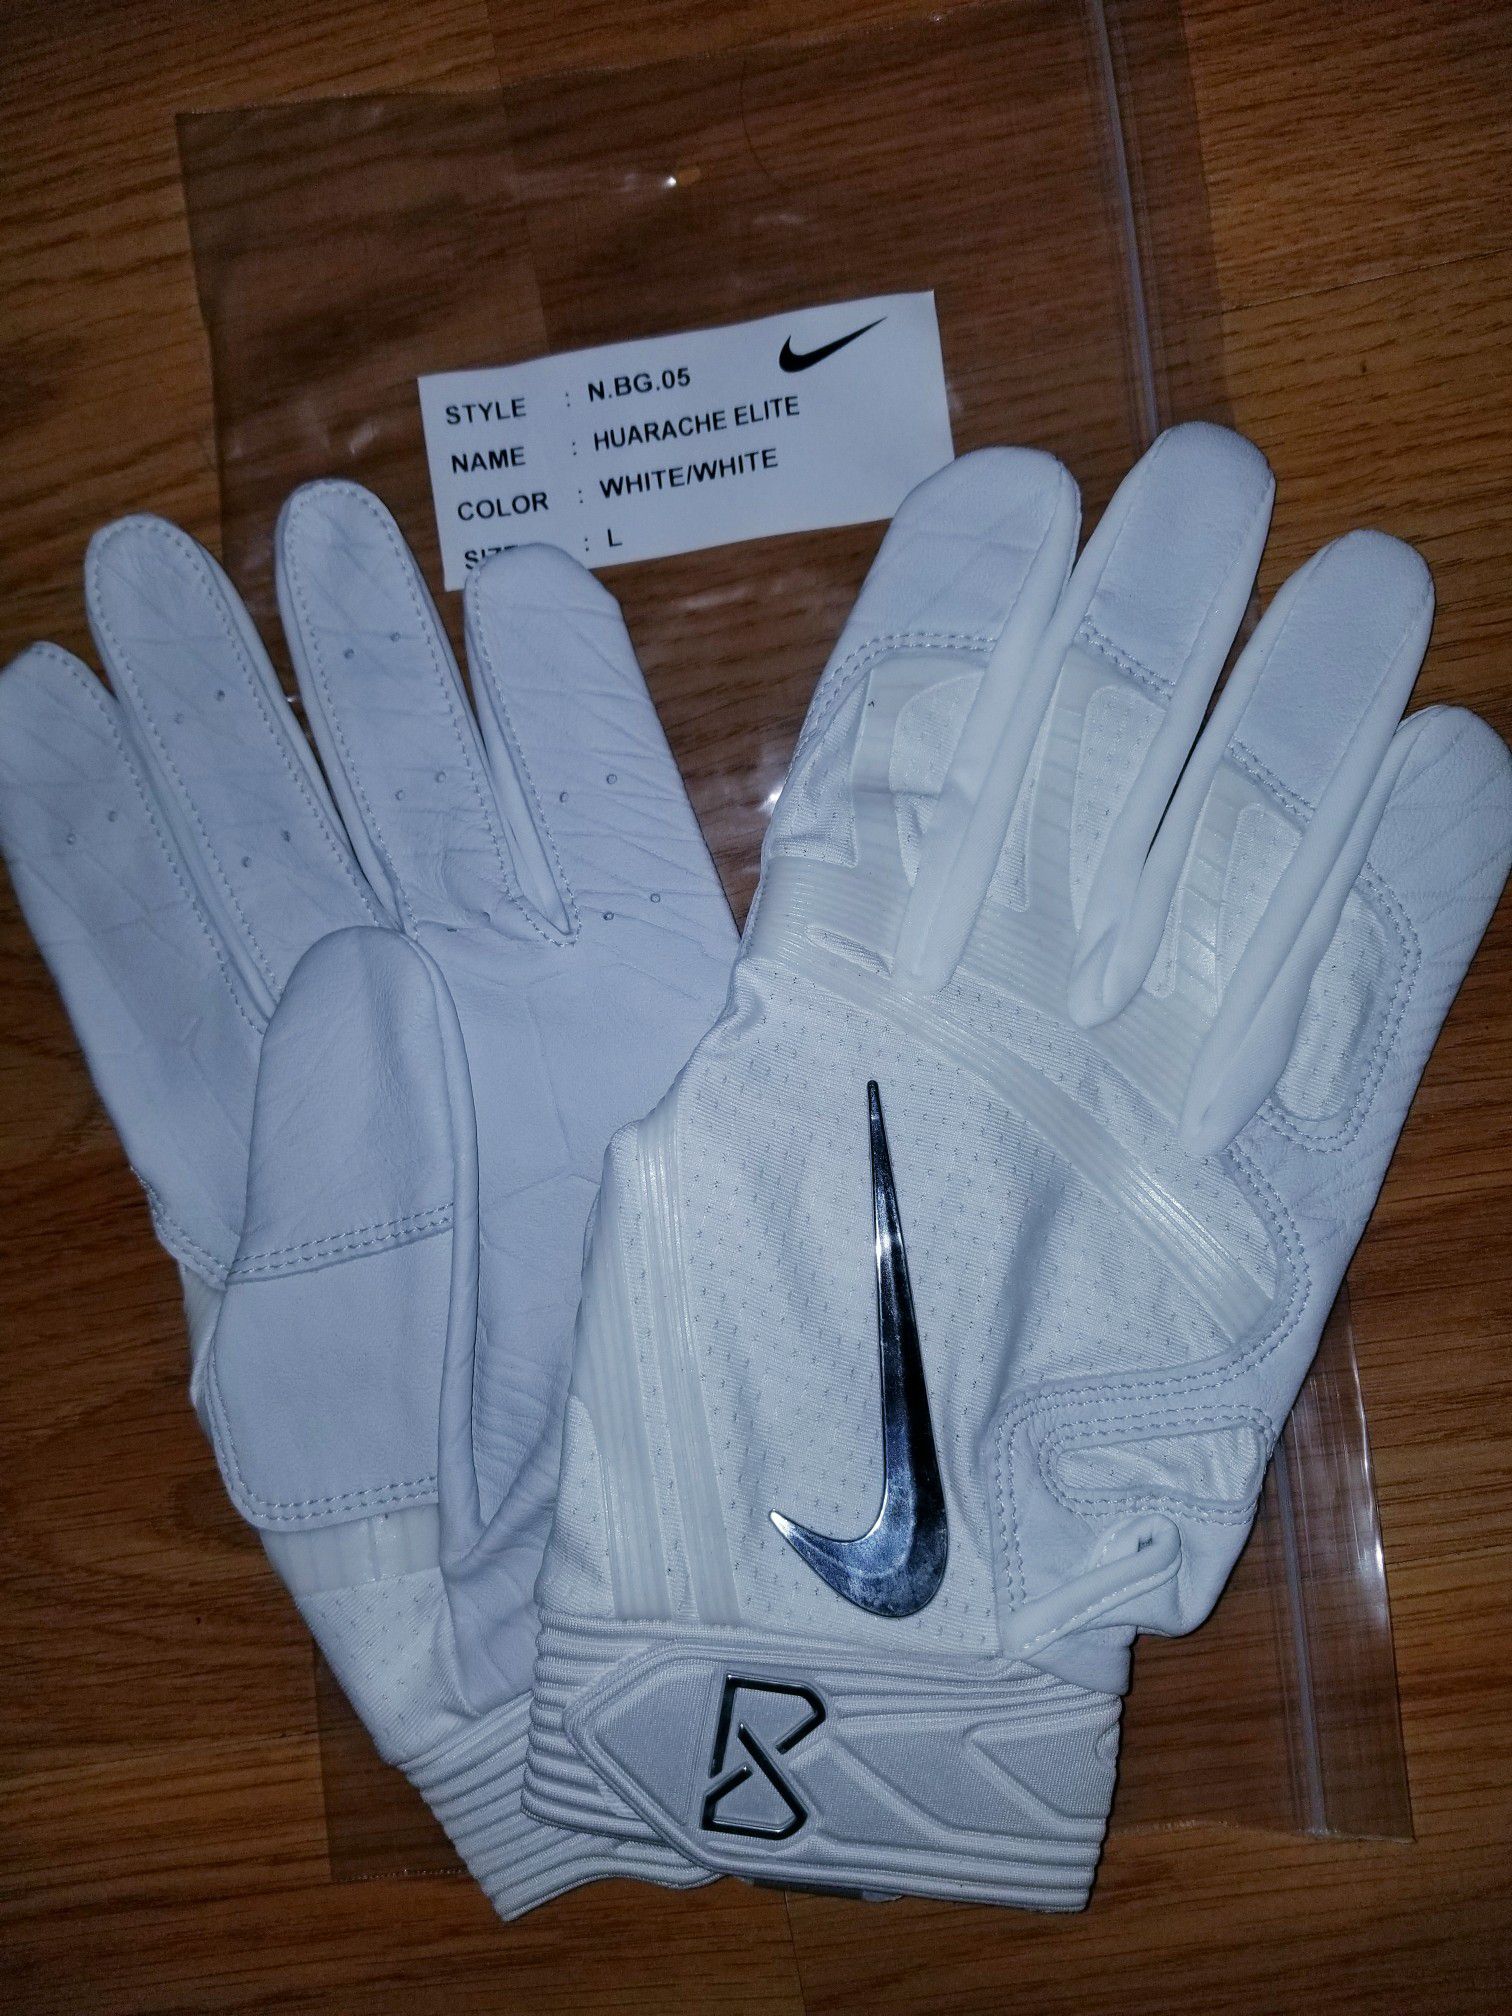 Brand New Nike Huarache Elite WHITE/WHITE Baseball Batting gloves Adult Large